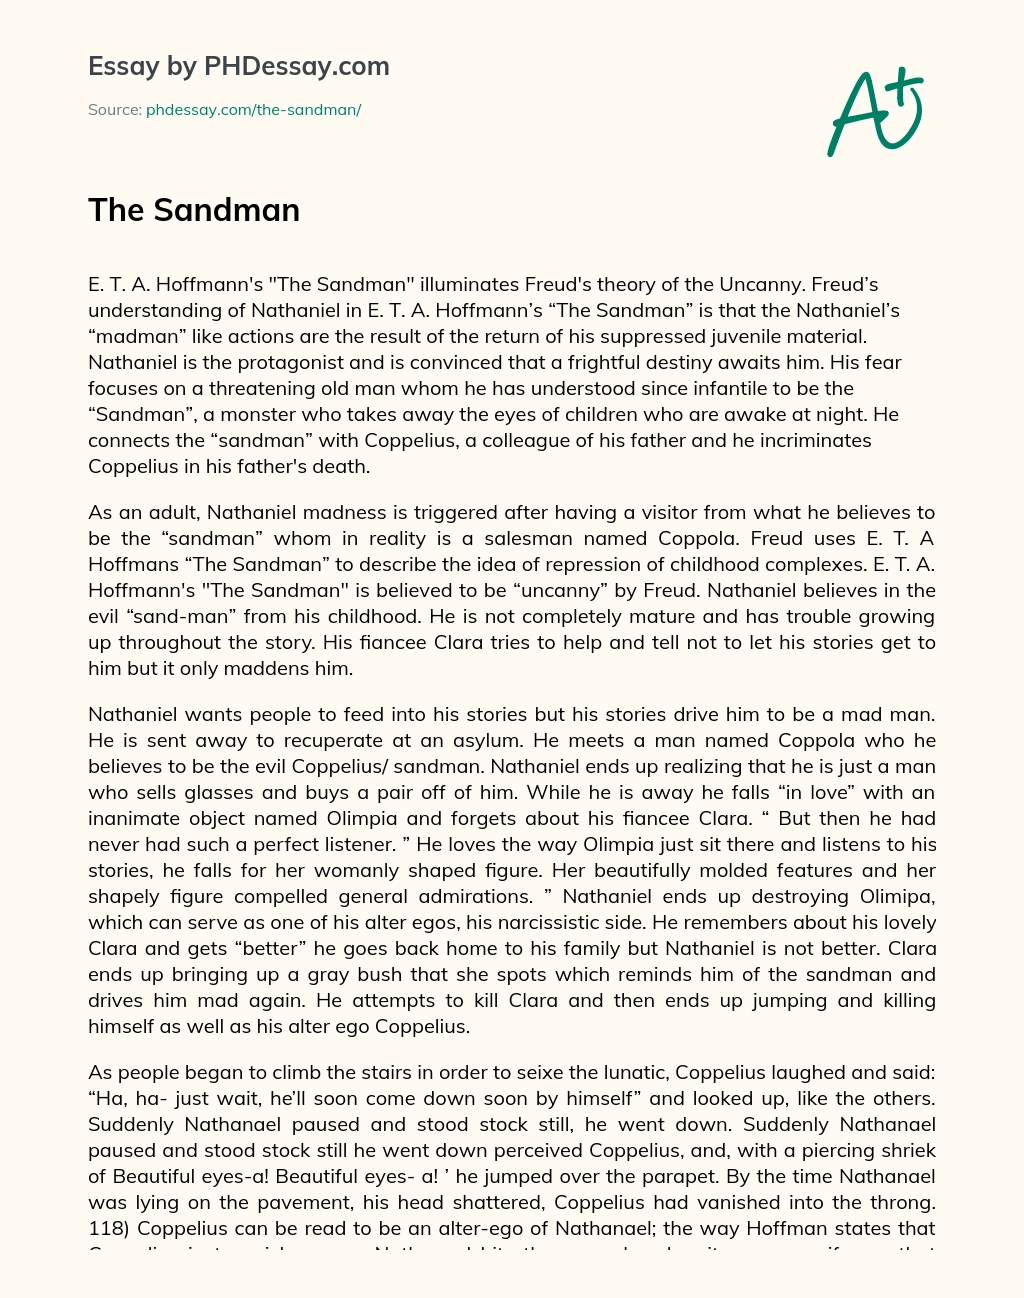 The Sandman essay